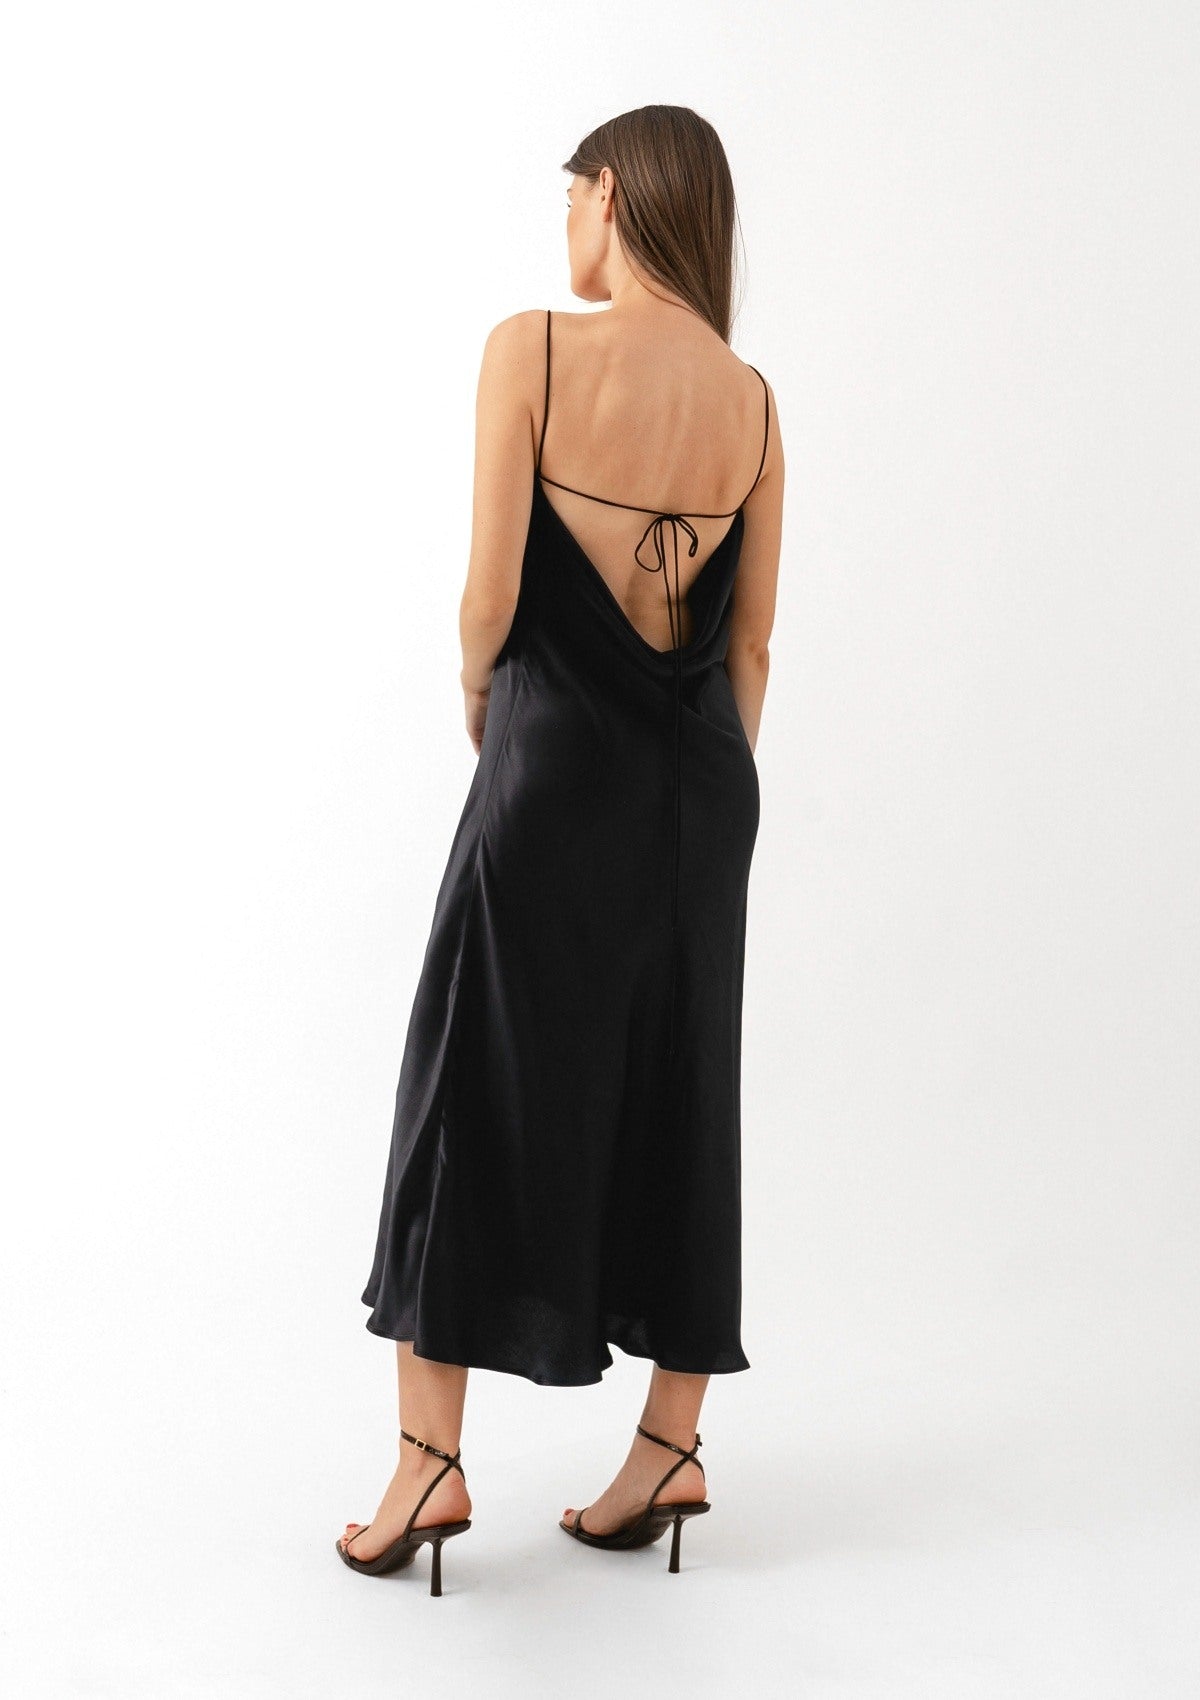 backless-black-evening-slip-dress-Silk & tonic